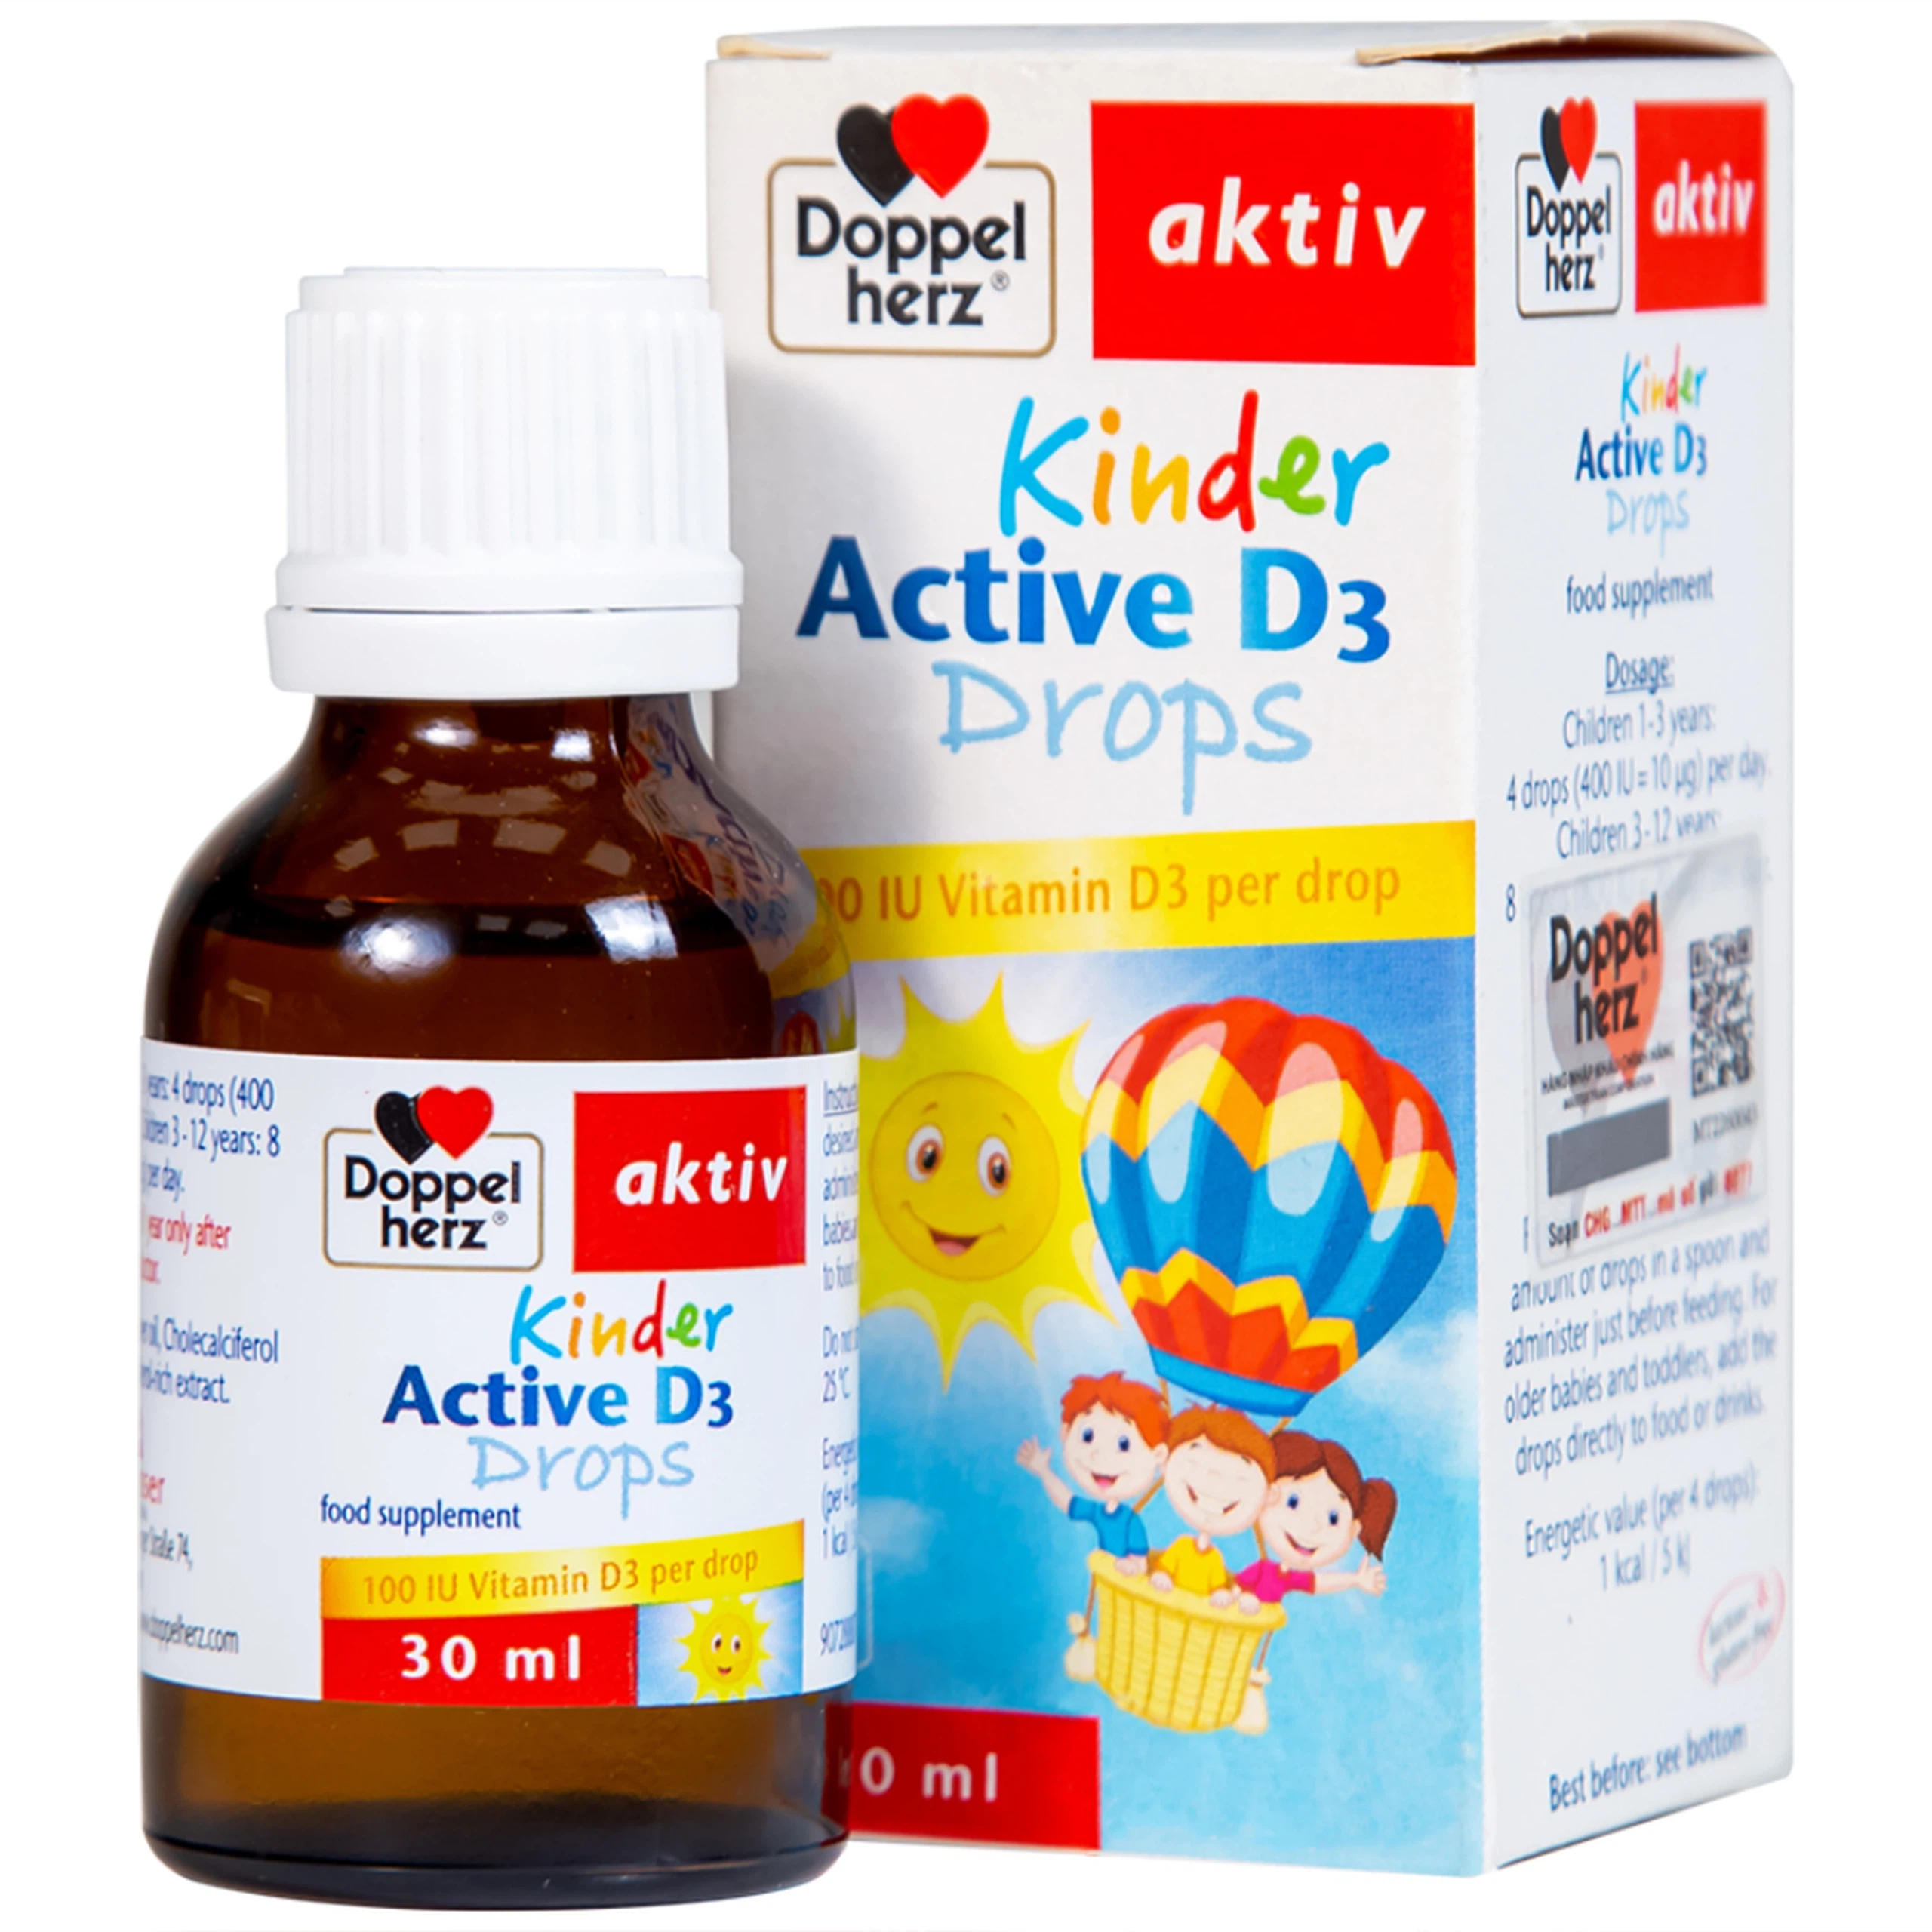 Siro Kinder Active D3 Drops Doppelherz Aktiv bổ sung vitamin D3, tăng cường sức đề kháng (30ml)